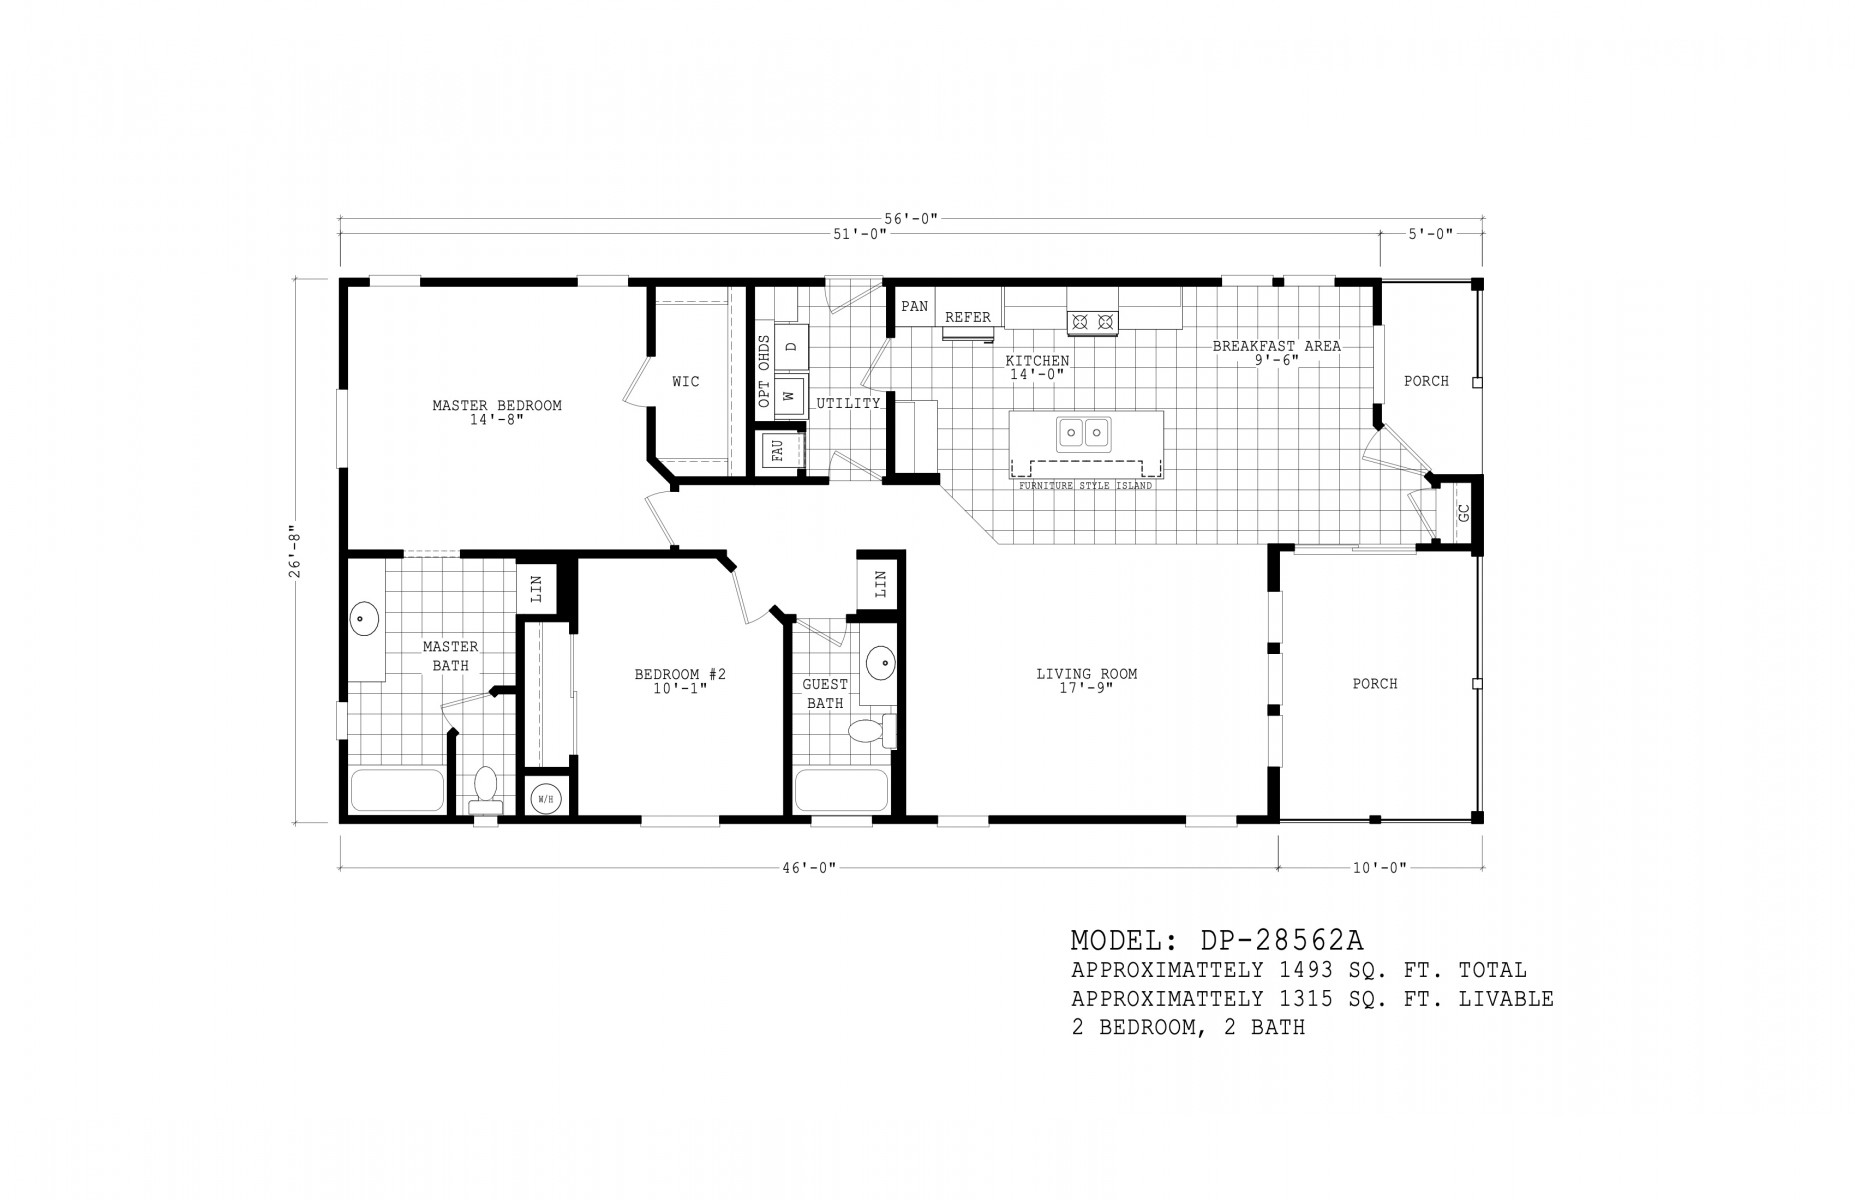 Homes Direct Modular Homes - Model DP28562A - Floorplan